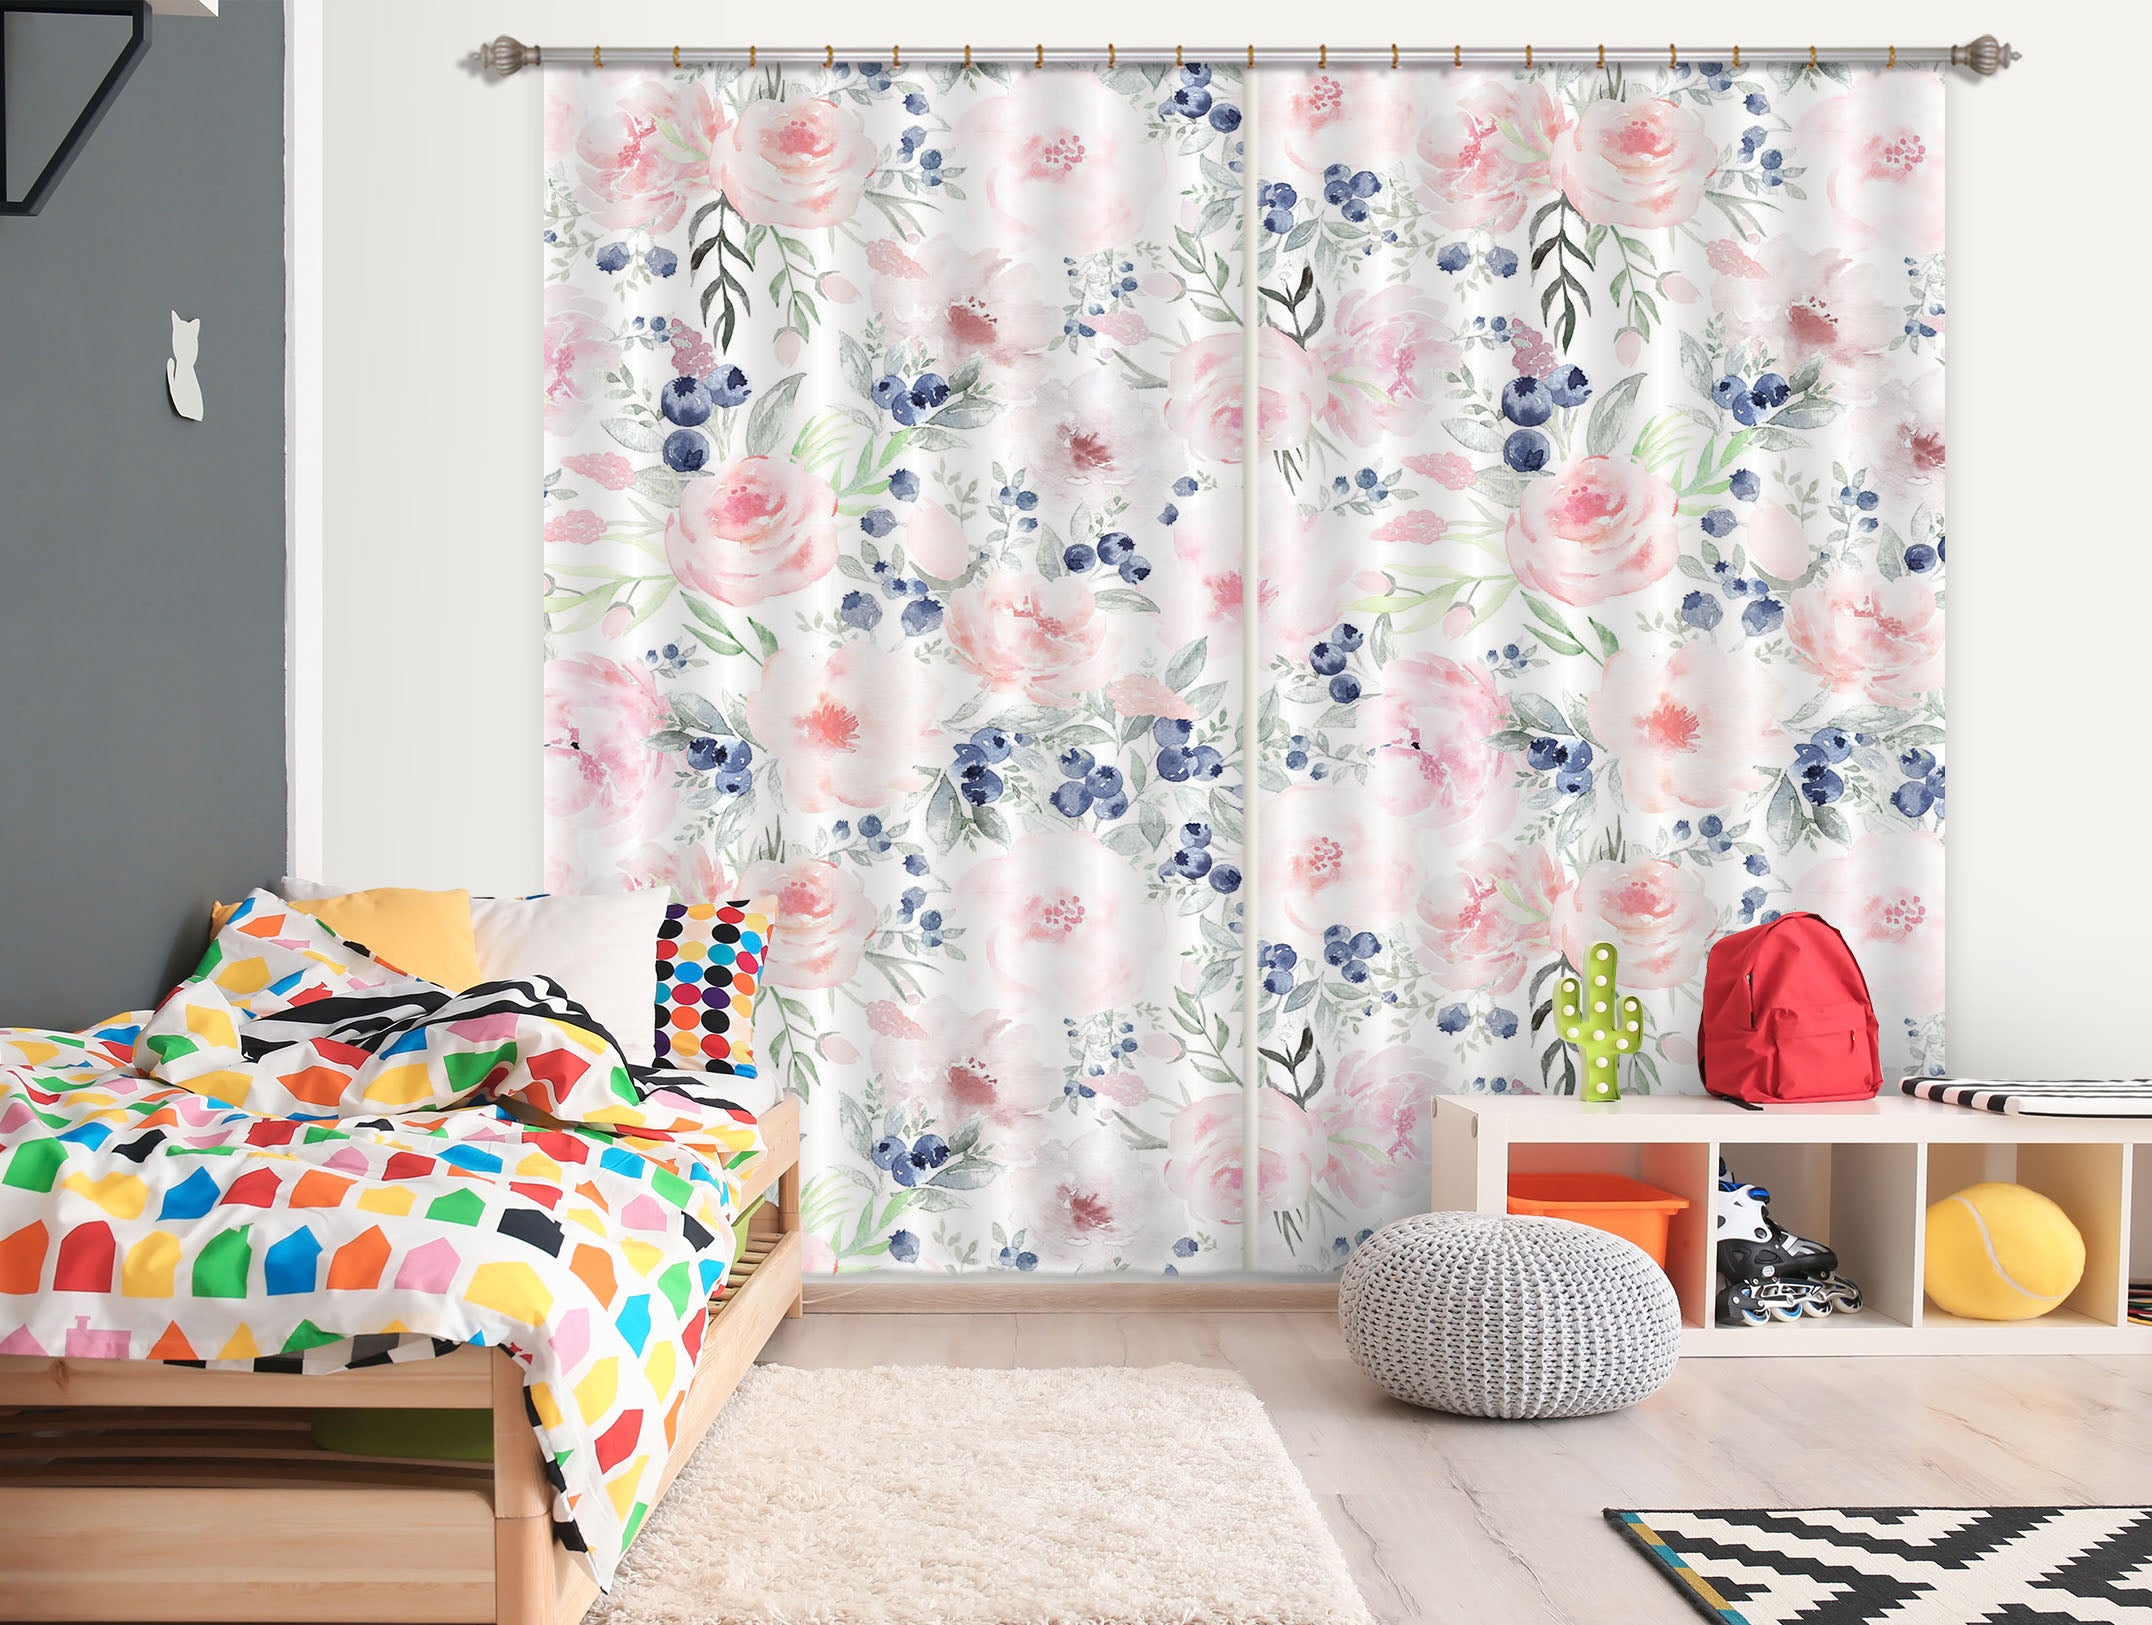 3D Blueberry Flower 239 Uta Naumann Curtain Curtains Drapes